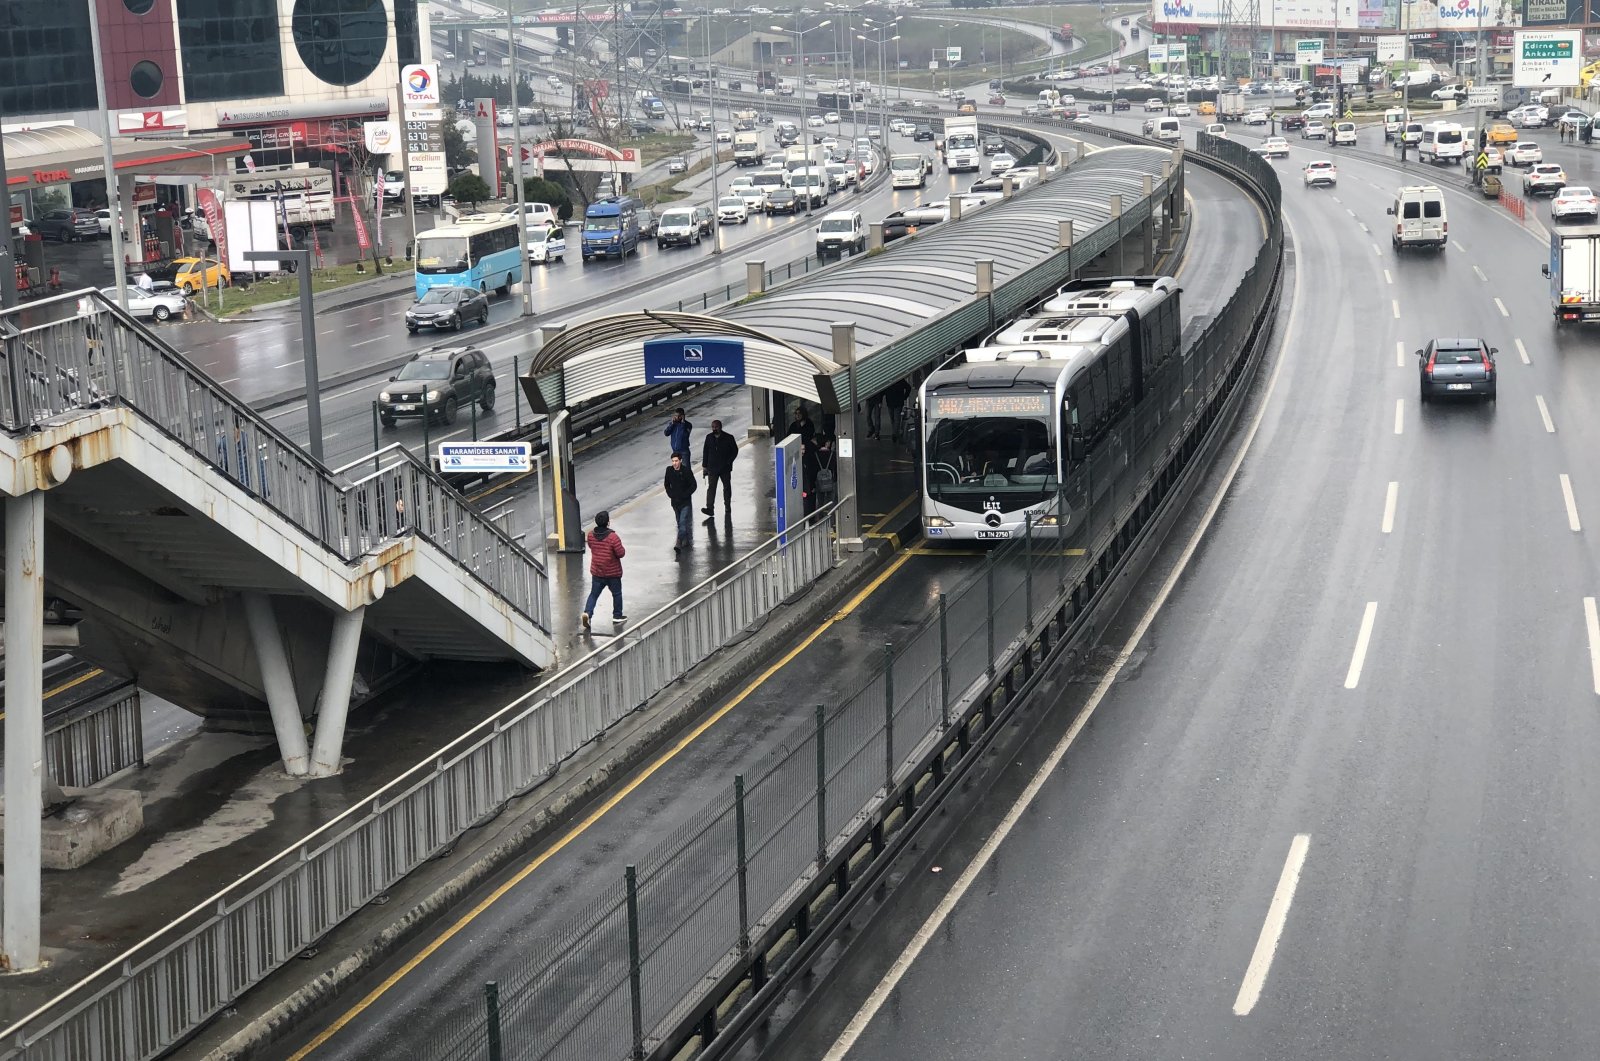 A Metrobus vehicle approaches a bus stop in Istanbul, Türkiye, Feb. 21, 2020. (IHA Photo)